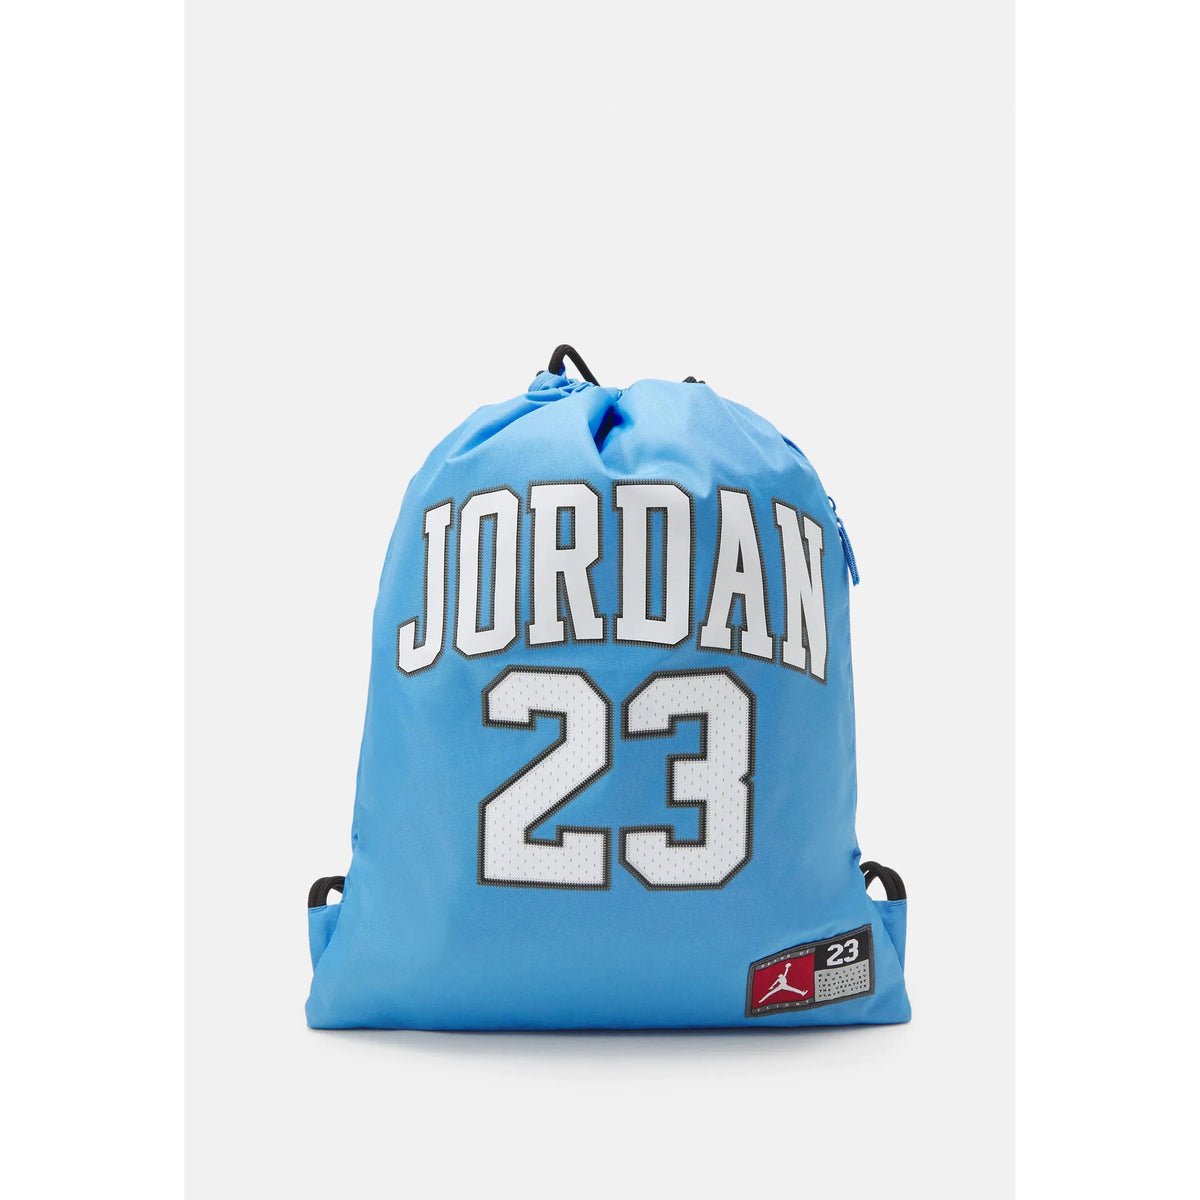 Jordan 23 Rugzakje